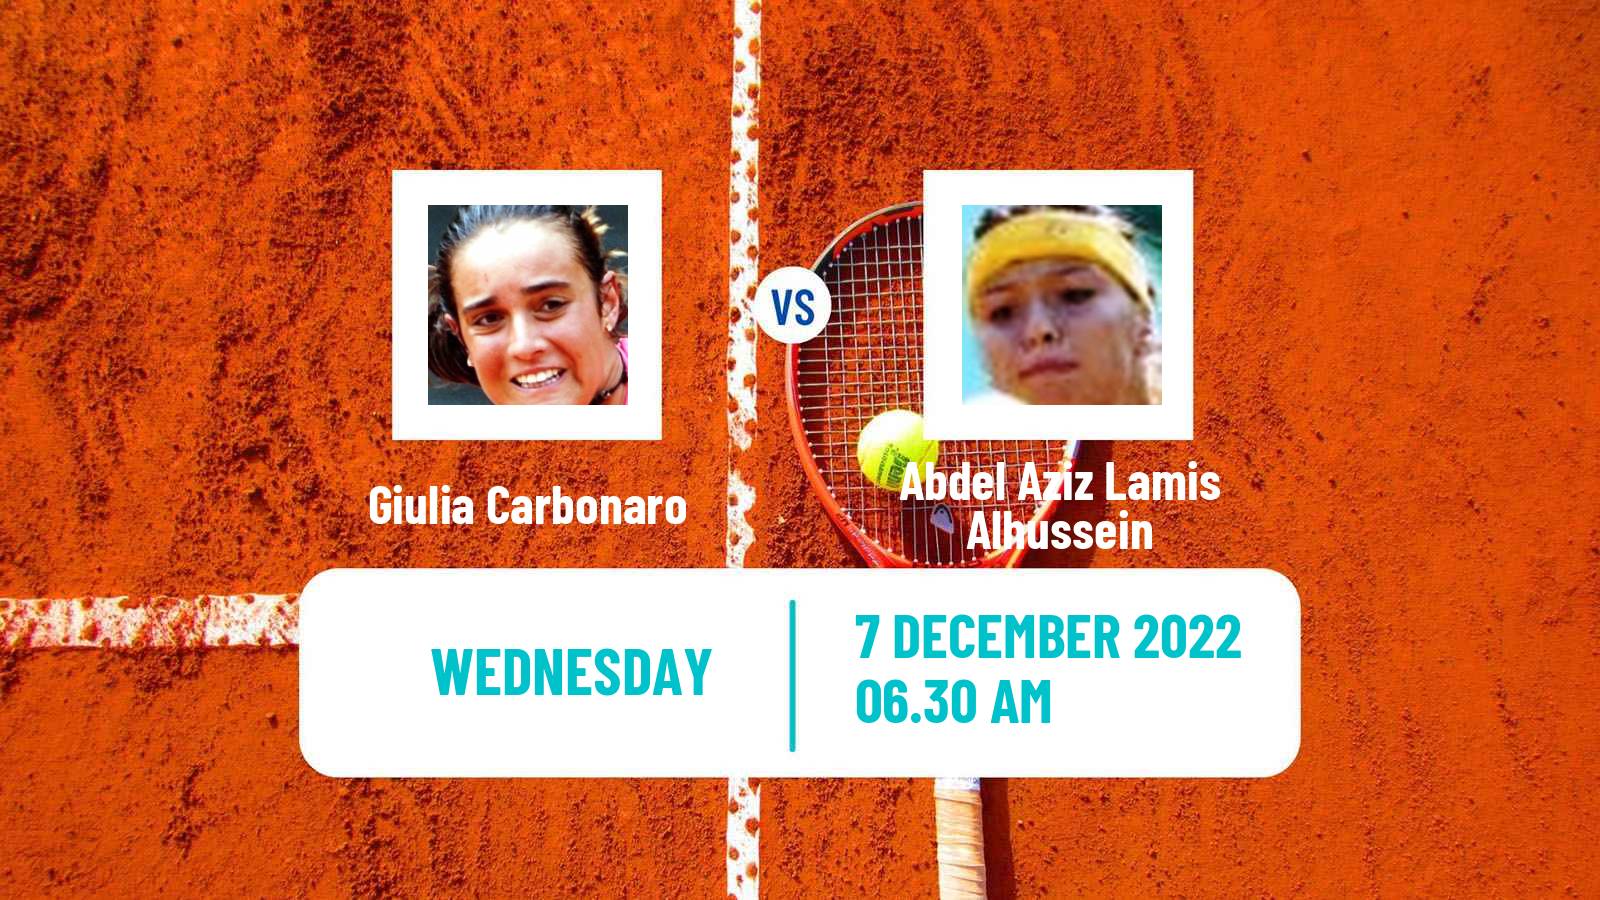 Tennis ITF Tournaments Giulia Carbonaro - Abdel Aziz Lamis Alhussein